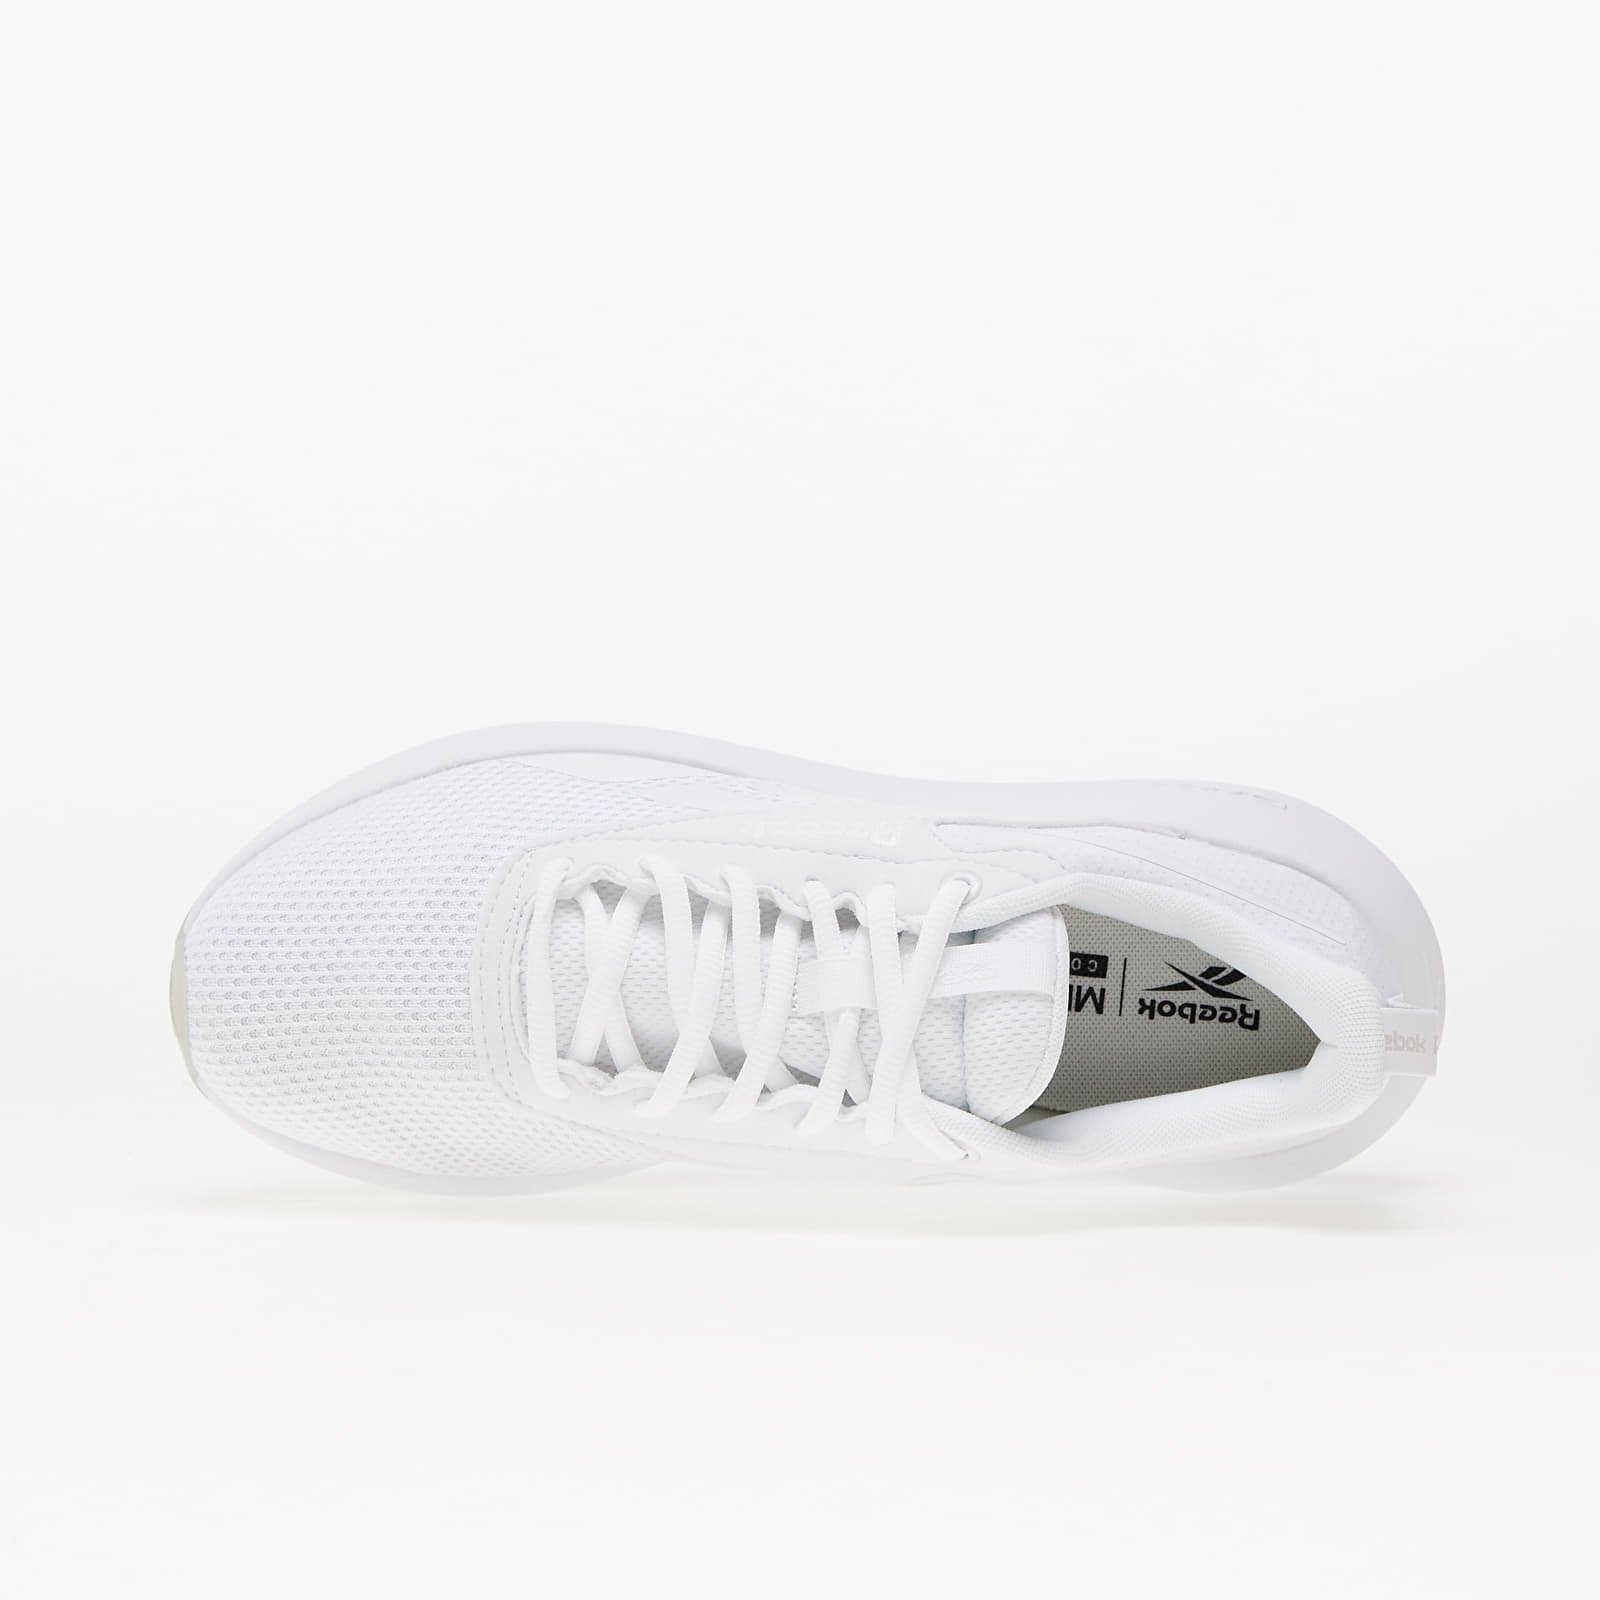 DMX Comfort + White, Low-top sneakers